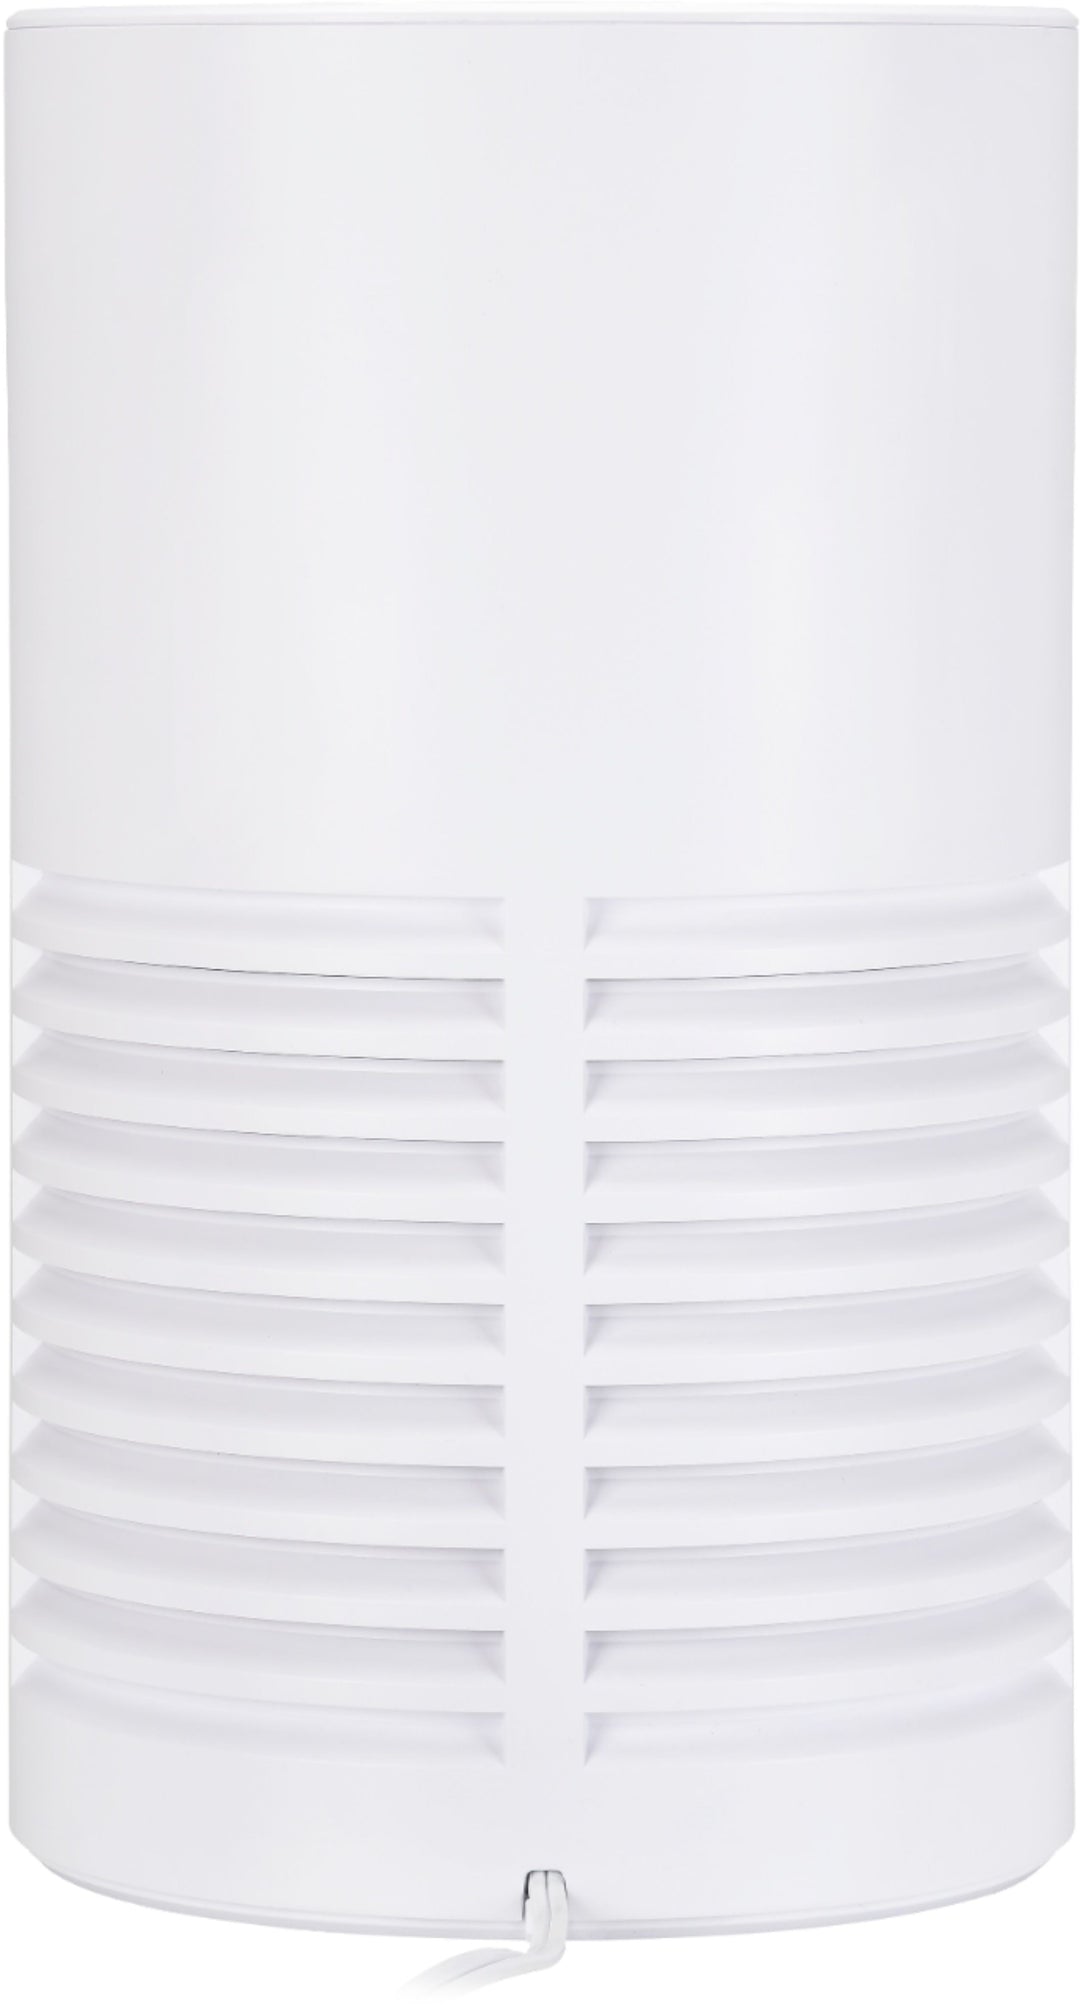 GermGuardian - AC4711W 15-inch 4-in-1 HEPA Filter Air Purifier for Homes, Medium Rooms, Allergies, Smoke, Dust, Dander - White_5